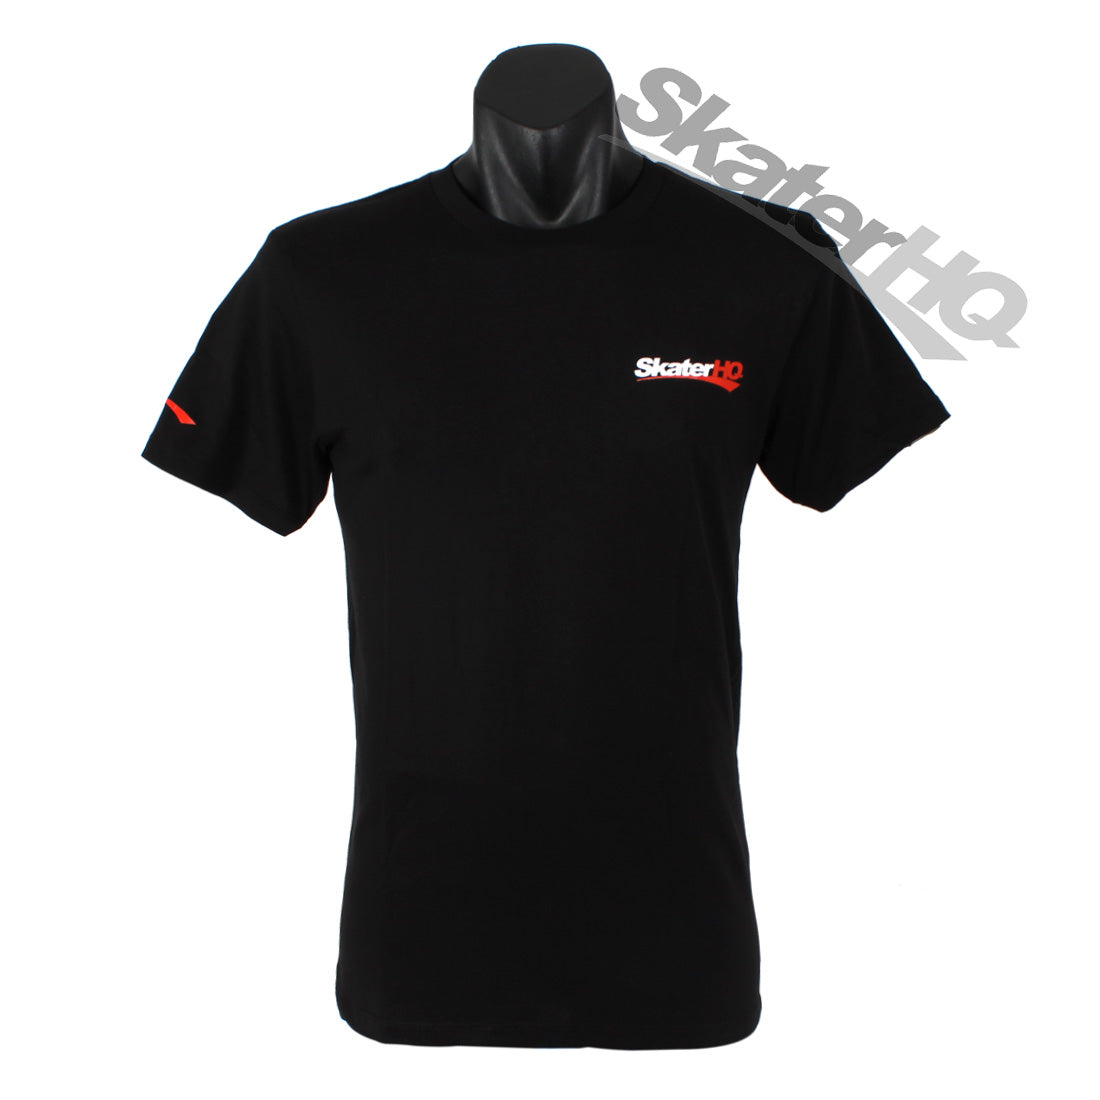 Skater HQ Adult Swoosh T-Shirt - Black Apparel Skater HQ Clothing